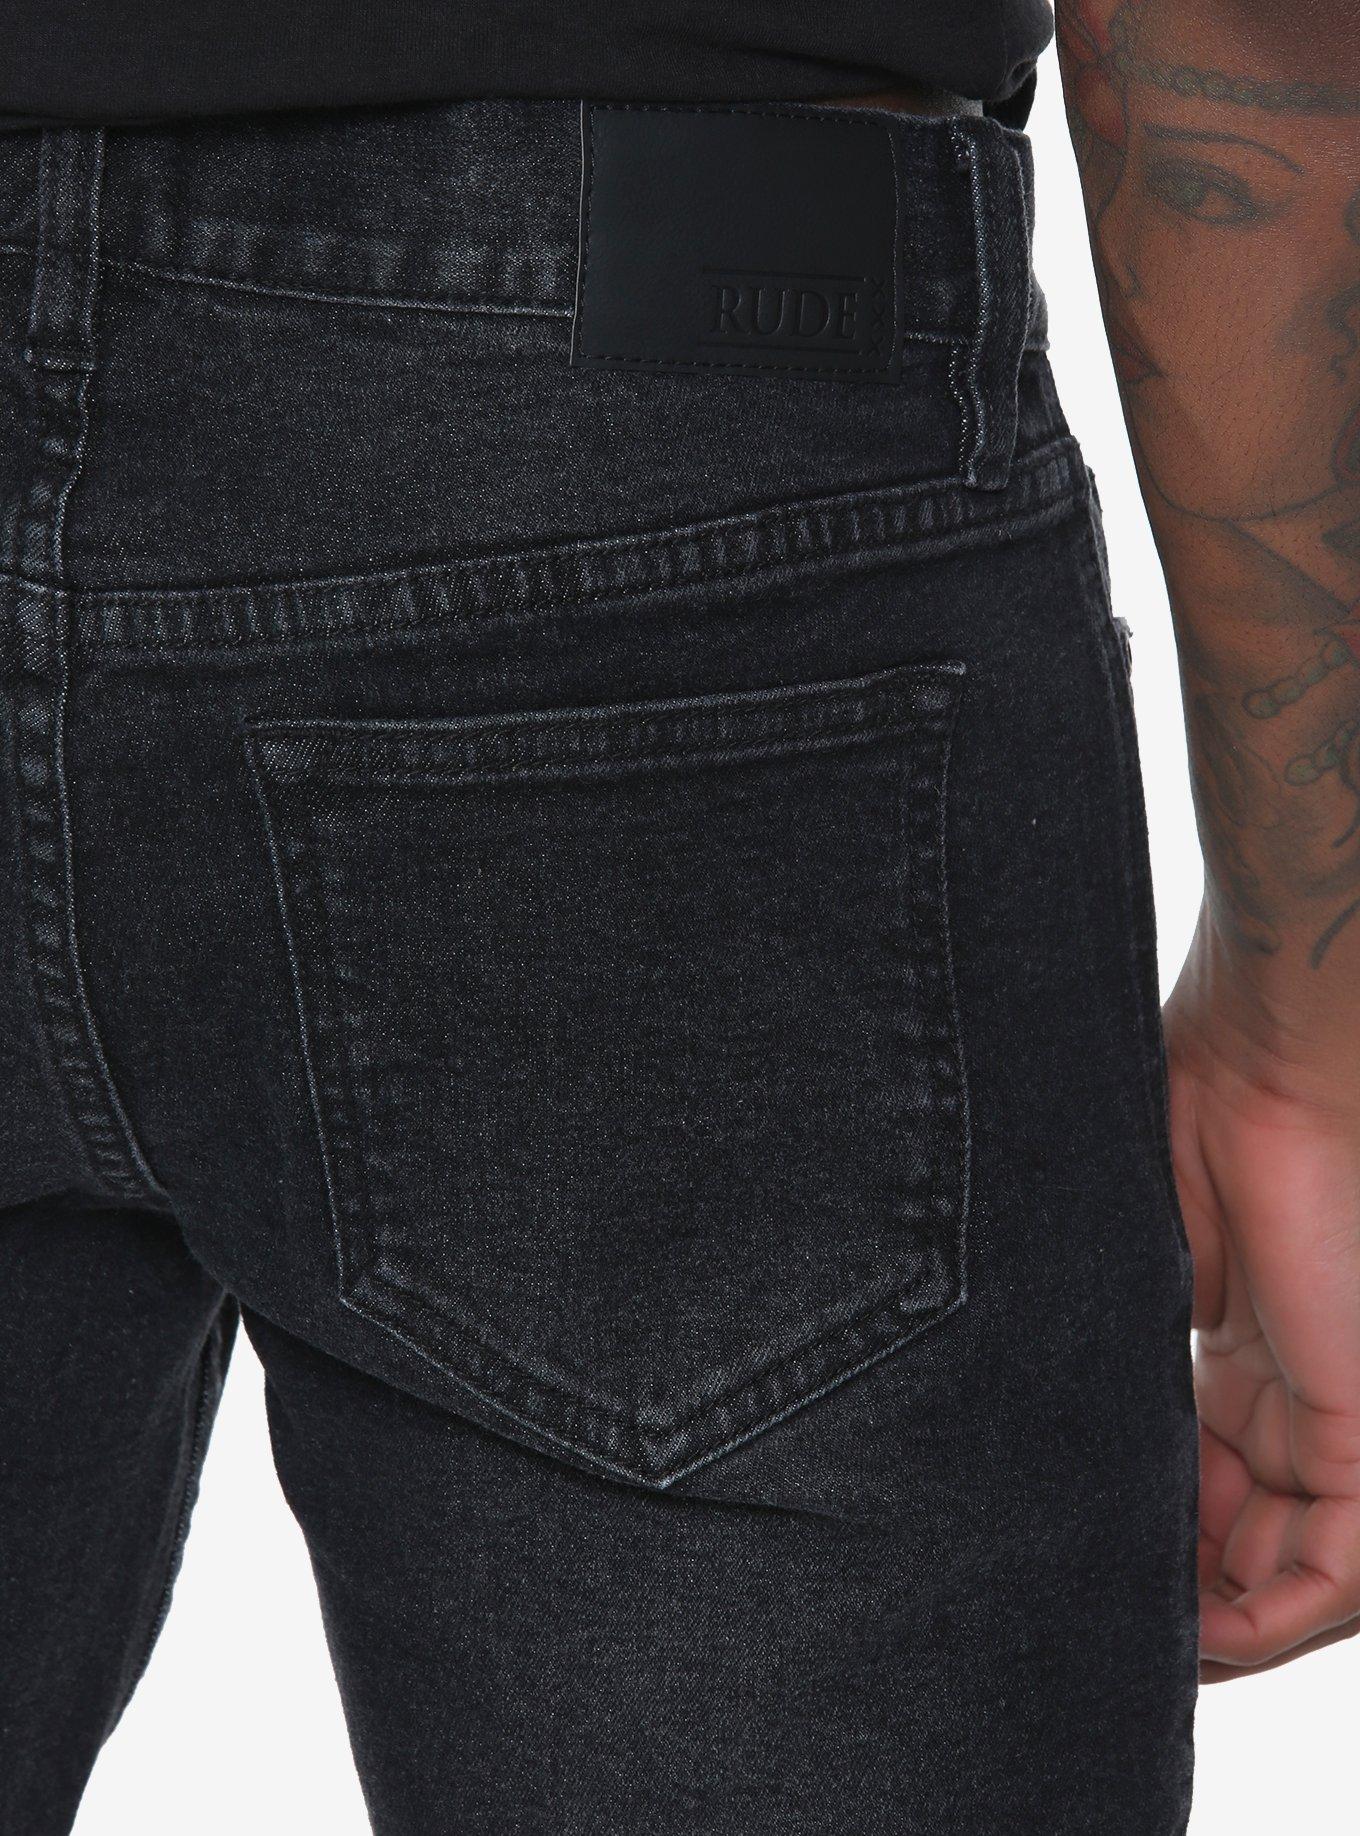 XXX RUDE 32 Inch Inseam Faded Black Ultra Destructed Skinny Jeans, BLACK, alternate